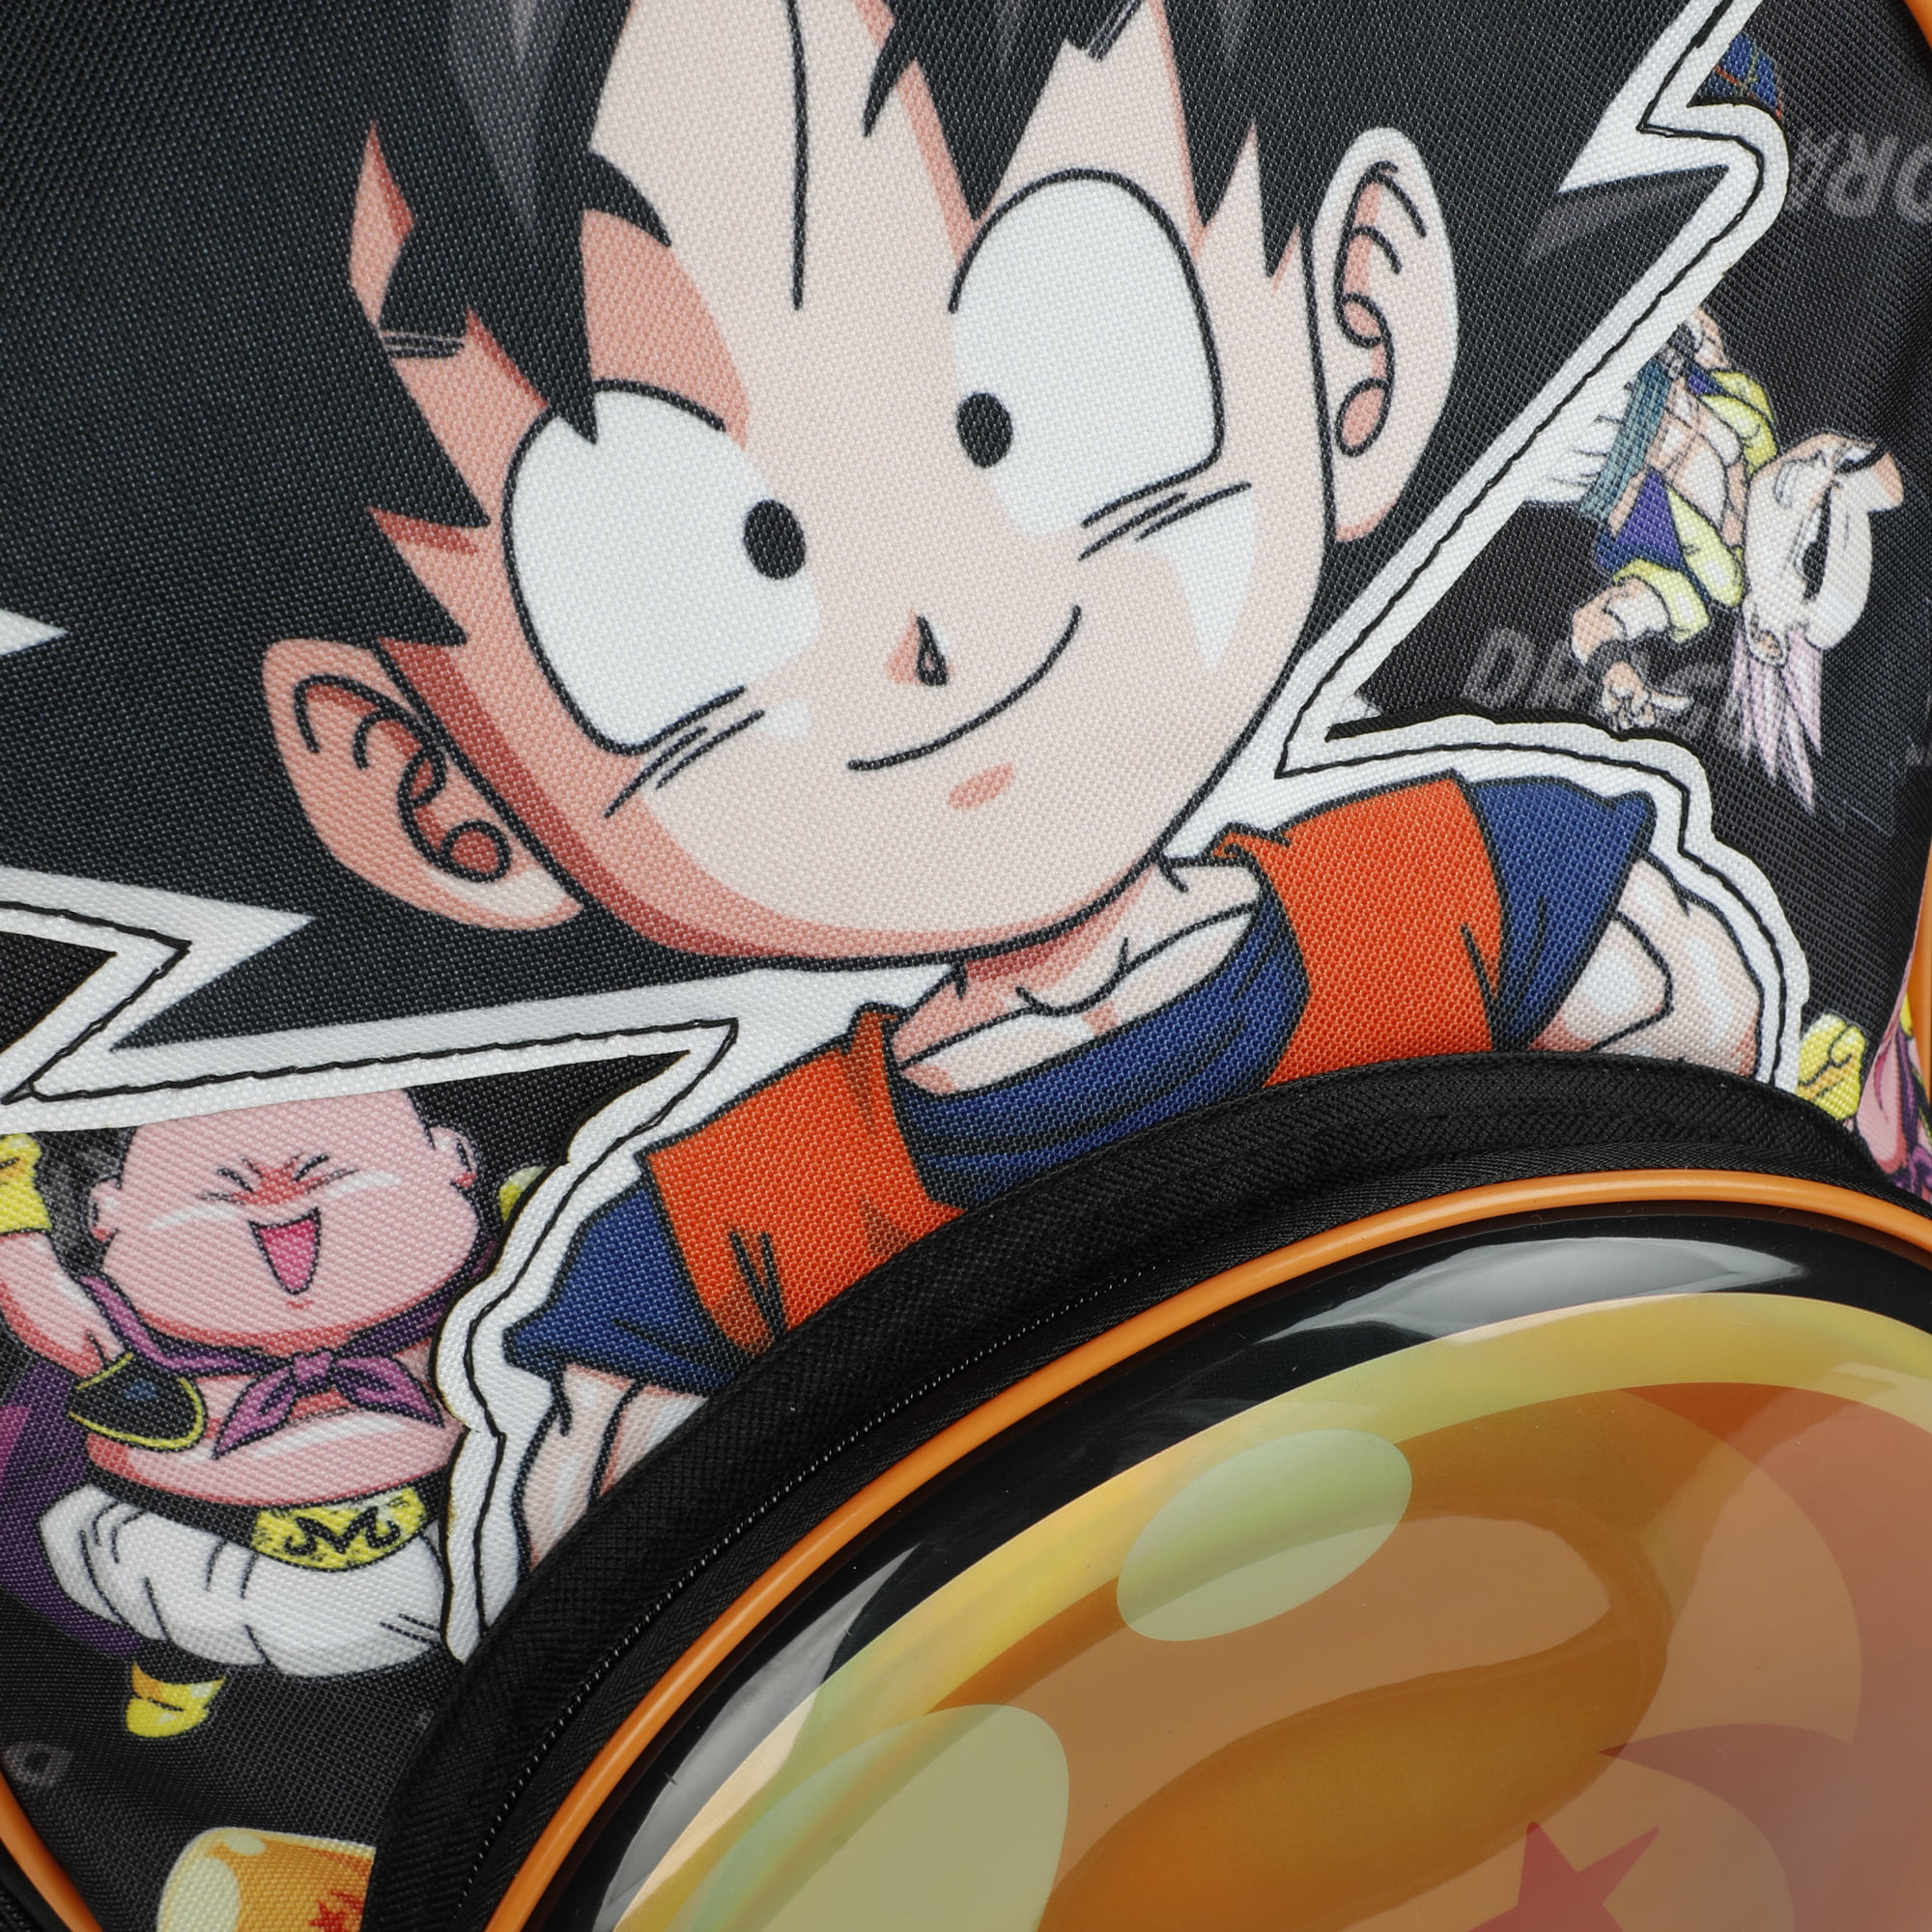 Goku Backpacks for Sale